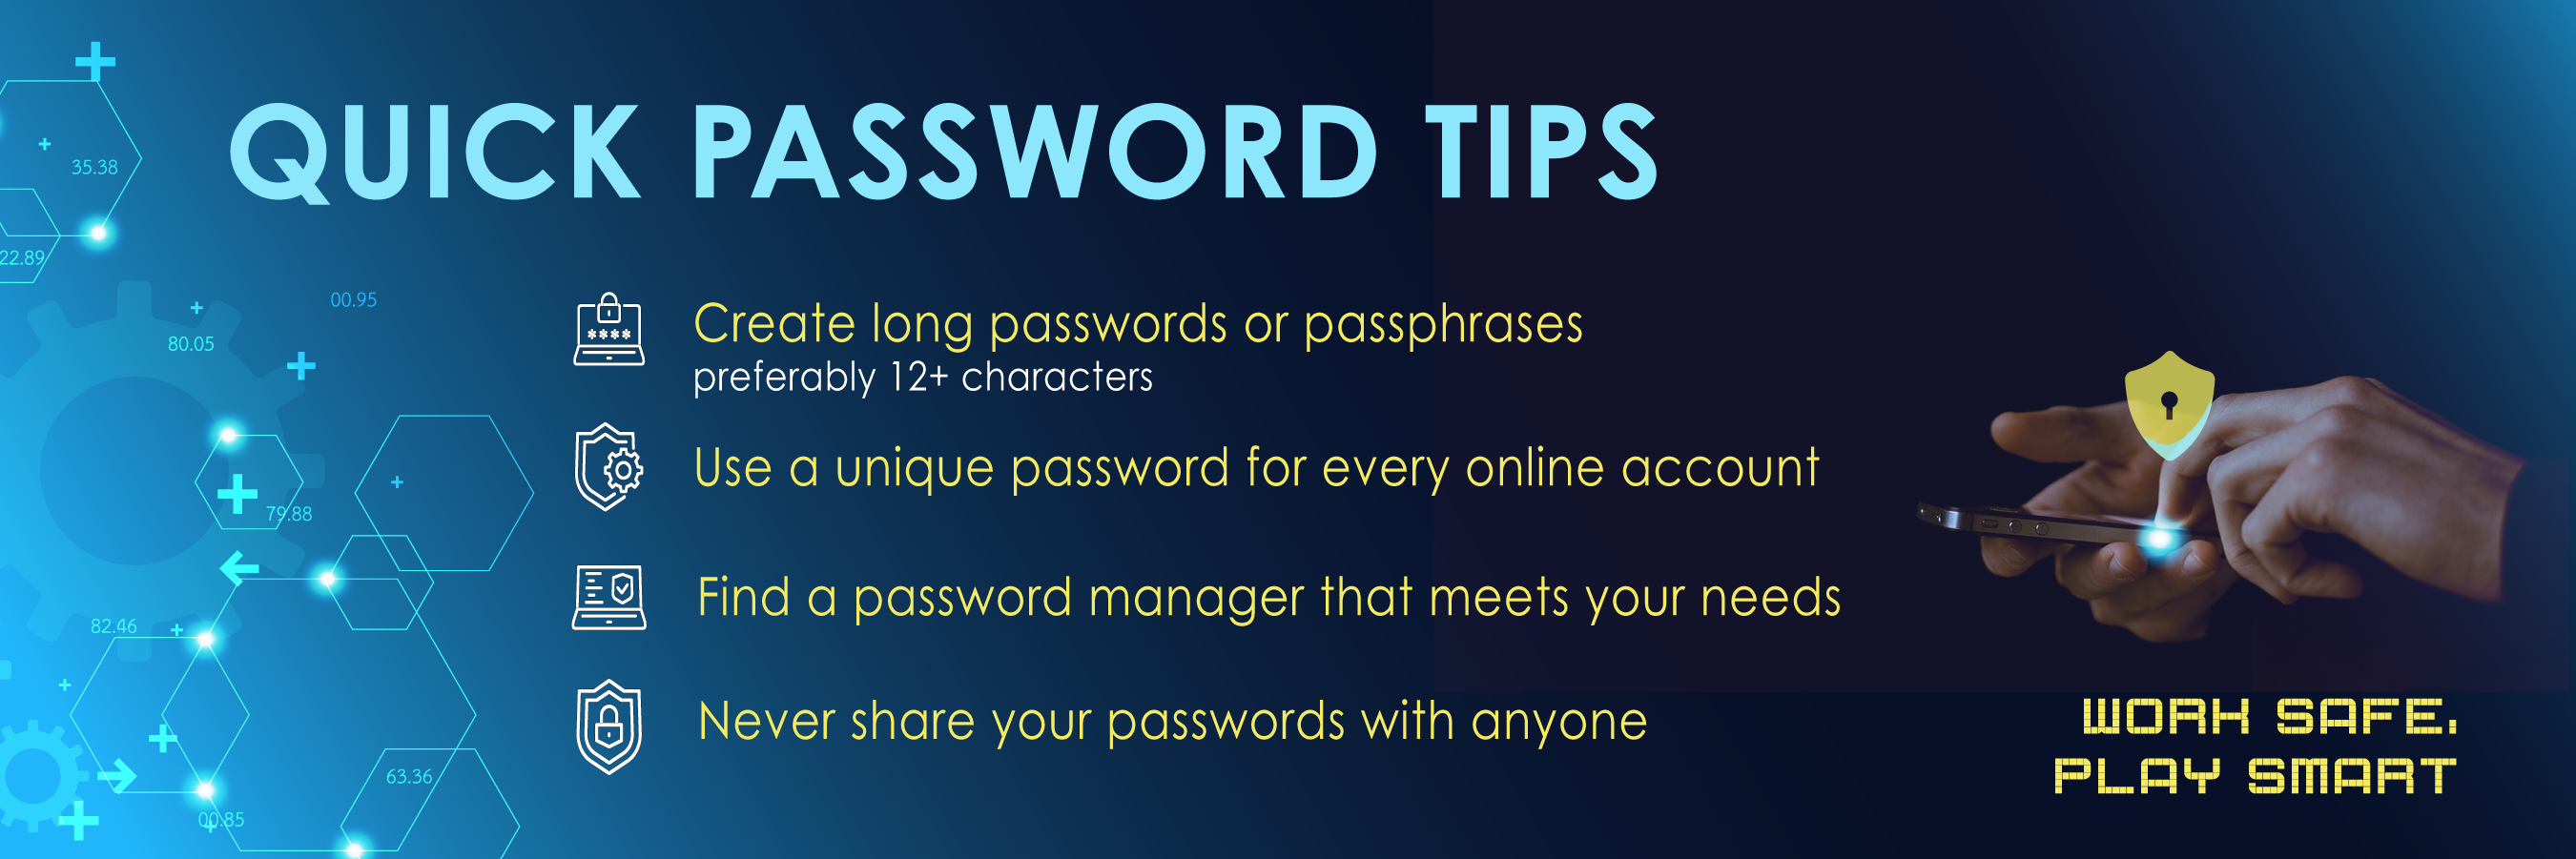 Passwords Quick Tips